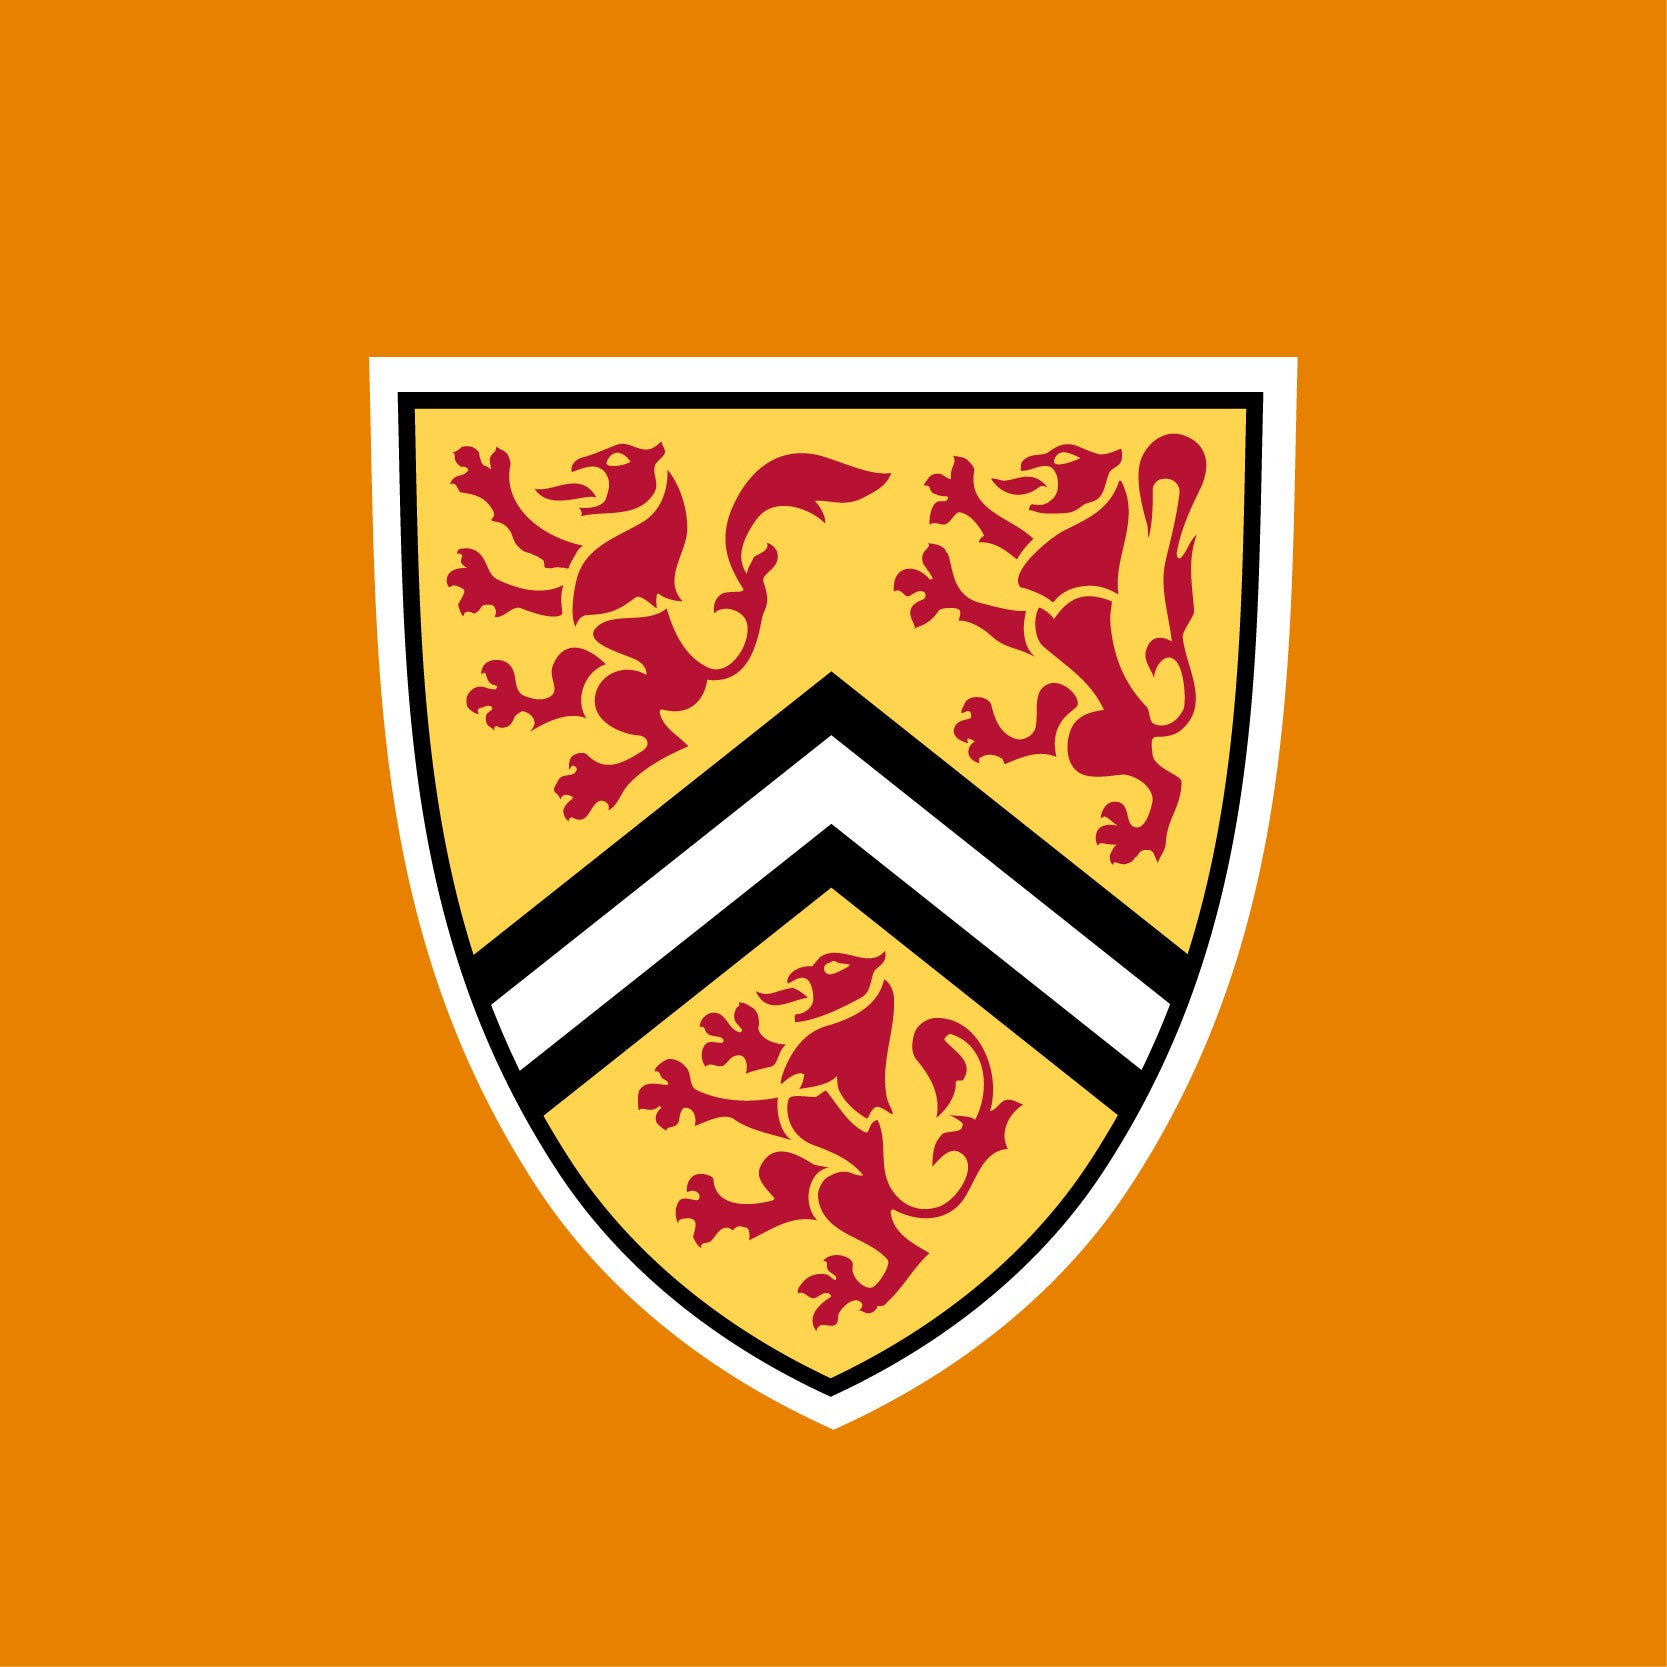 University crest in Arts colours